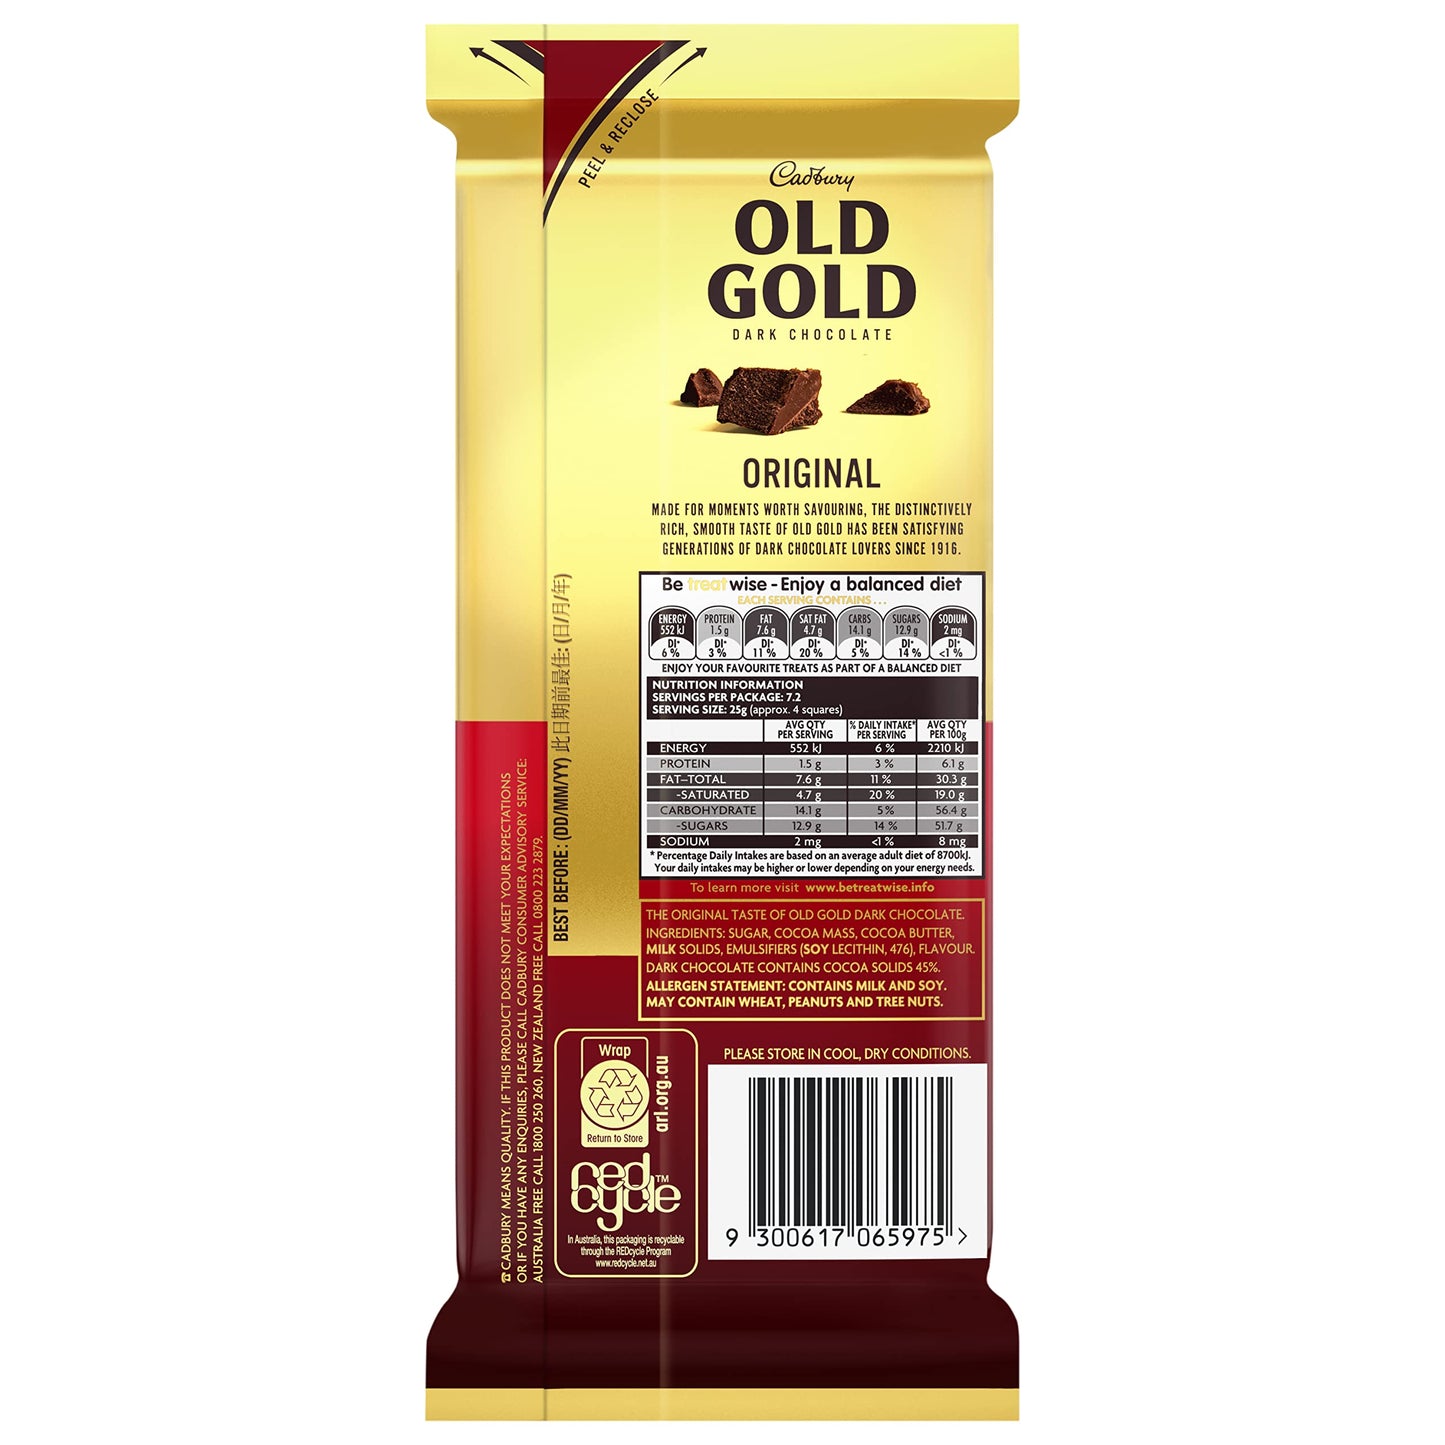 COUGAR Cadbury Old Gold Dark Chocolate Original, 180 g